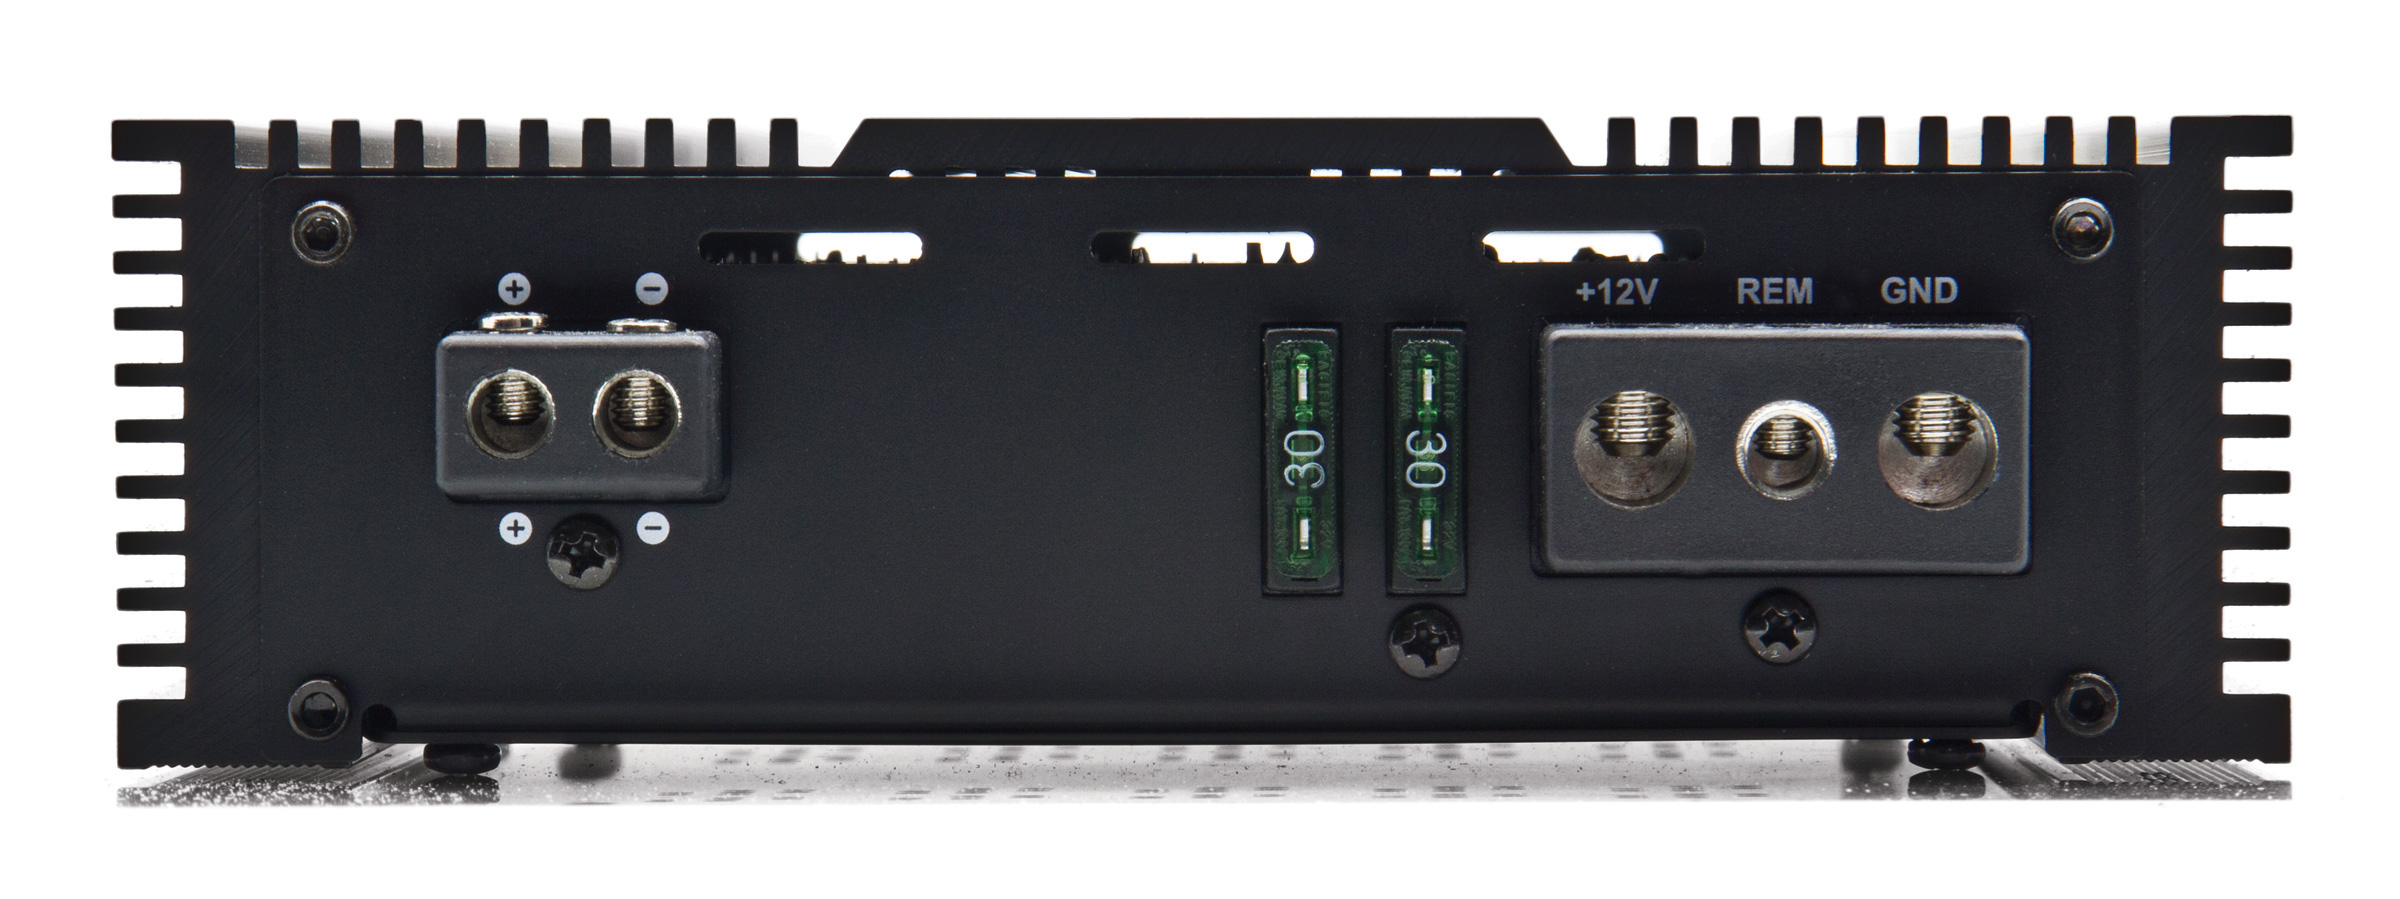 Digital Designs M45 Amplifier Review